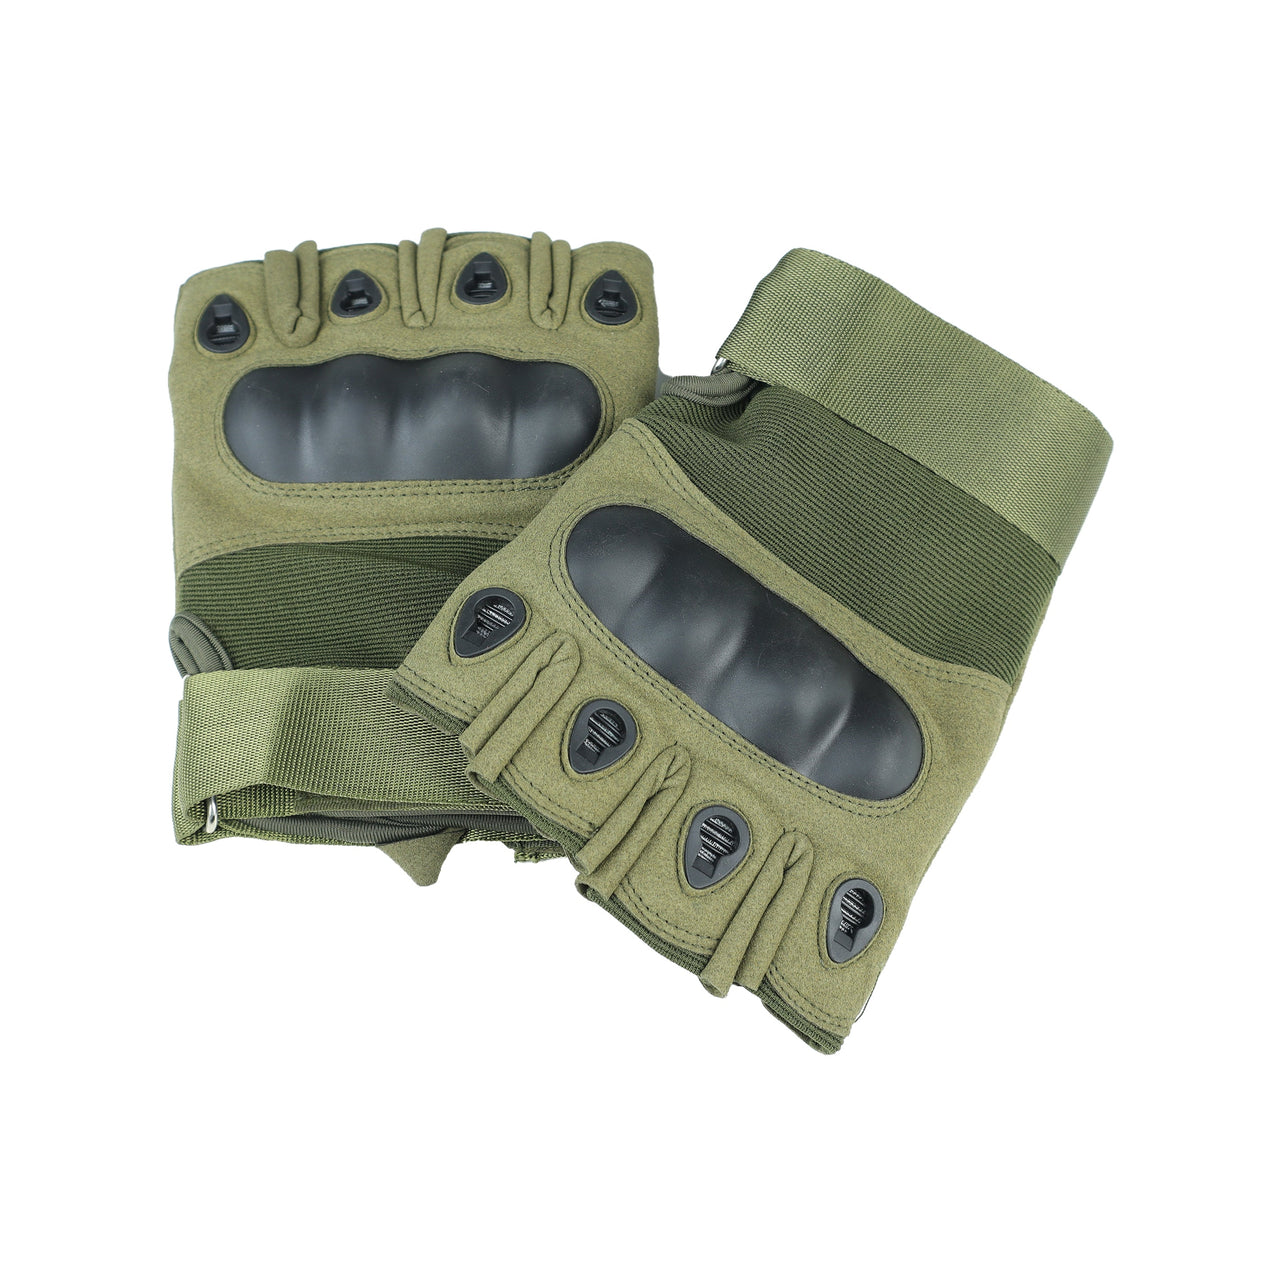 Tactical Fingerless Gloves- Olive Green